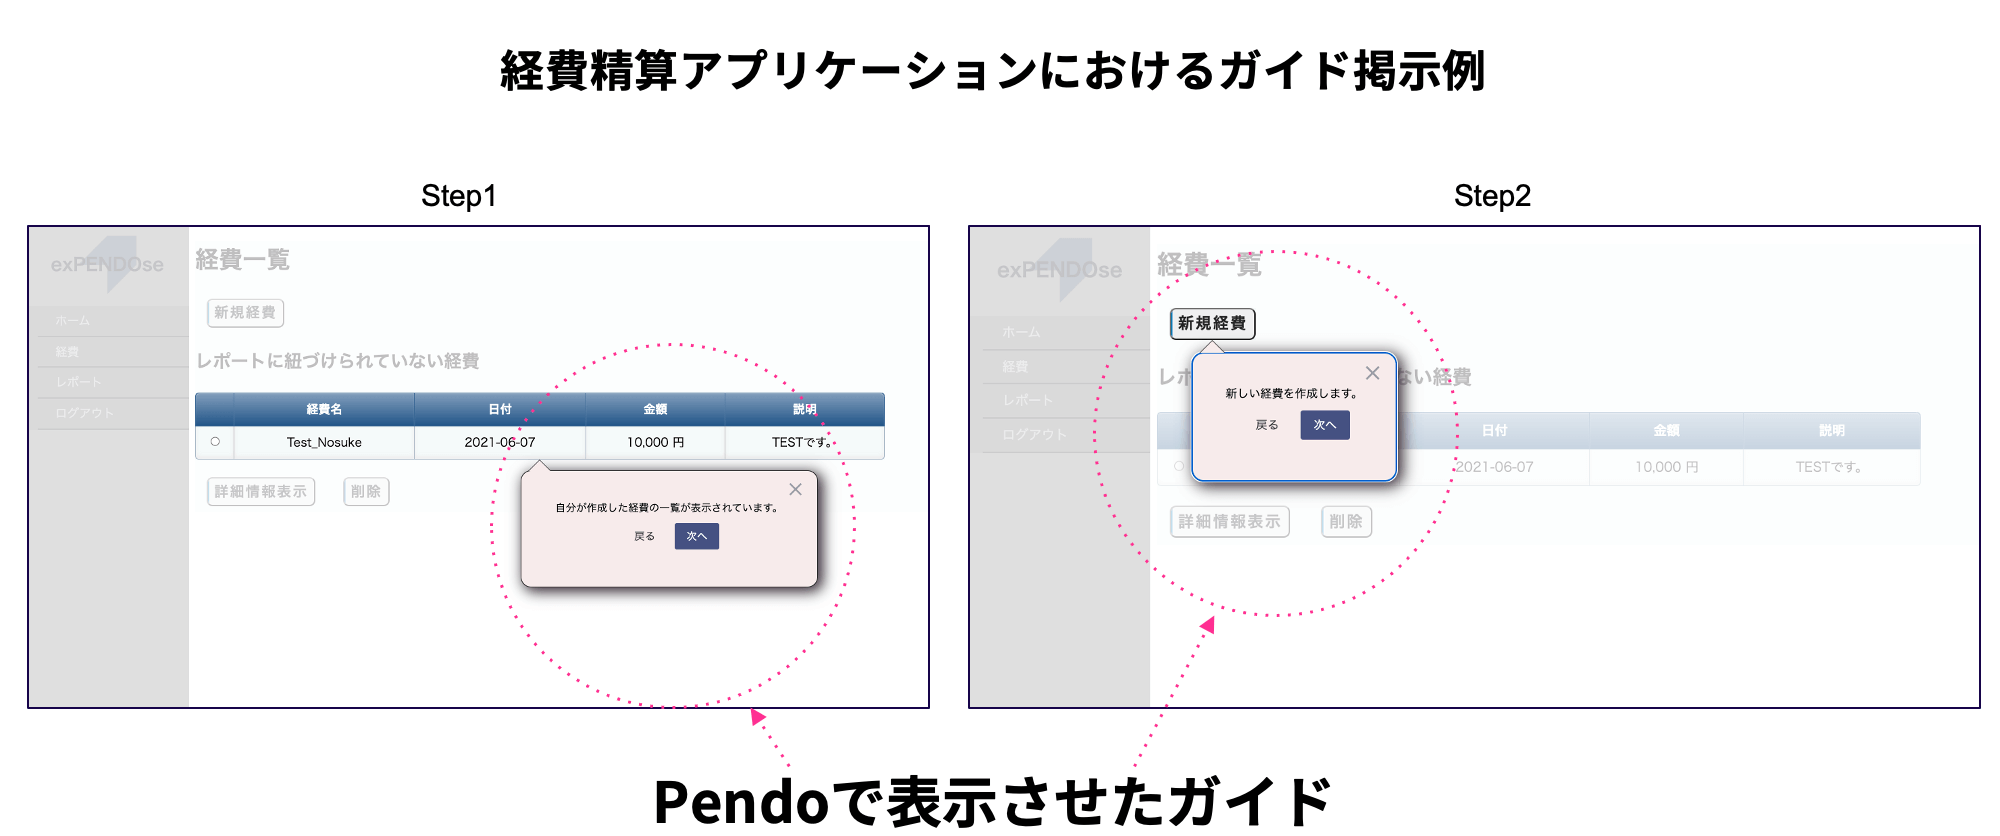 Pendo in-app guides